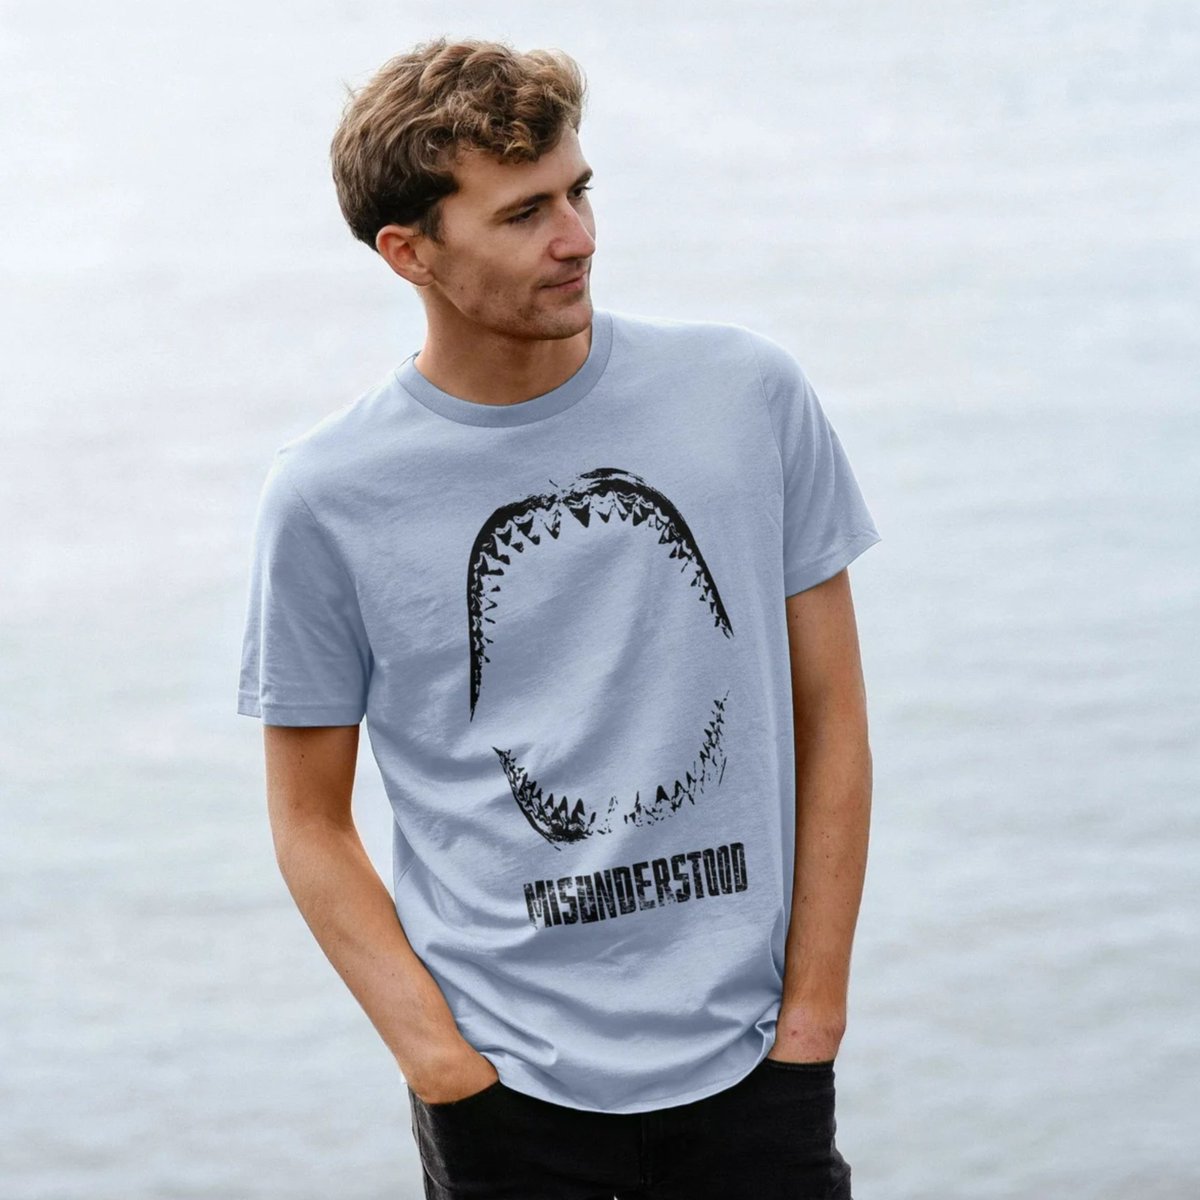 'Misunderstood' Shark Organic Cotton T-Shirt. 🦈
spiritanimalclothing.co.uk/collection/men… 

#sustainablefashion #shark #jaws
#misunderstood #spiritanimal #mensfashion #tshirt #predator #animallover #sharktshirt #sharklover #ocean #greatwhite #savesharks #sharkconservation #plasticfree